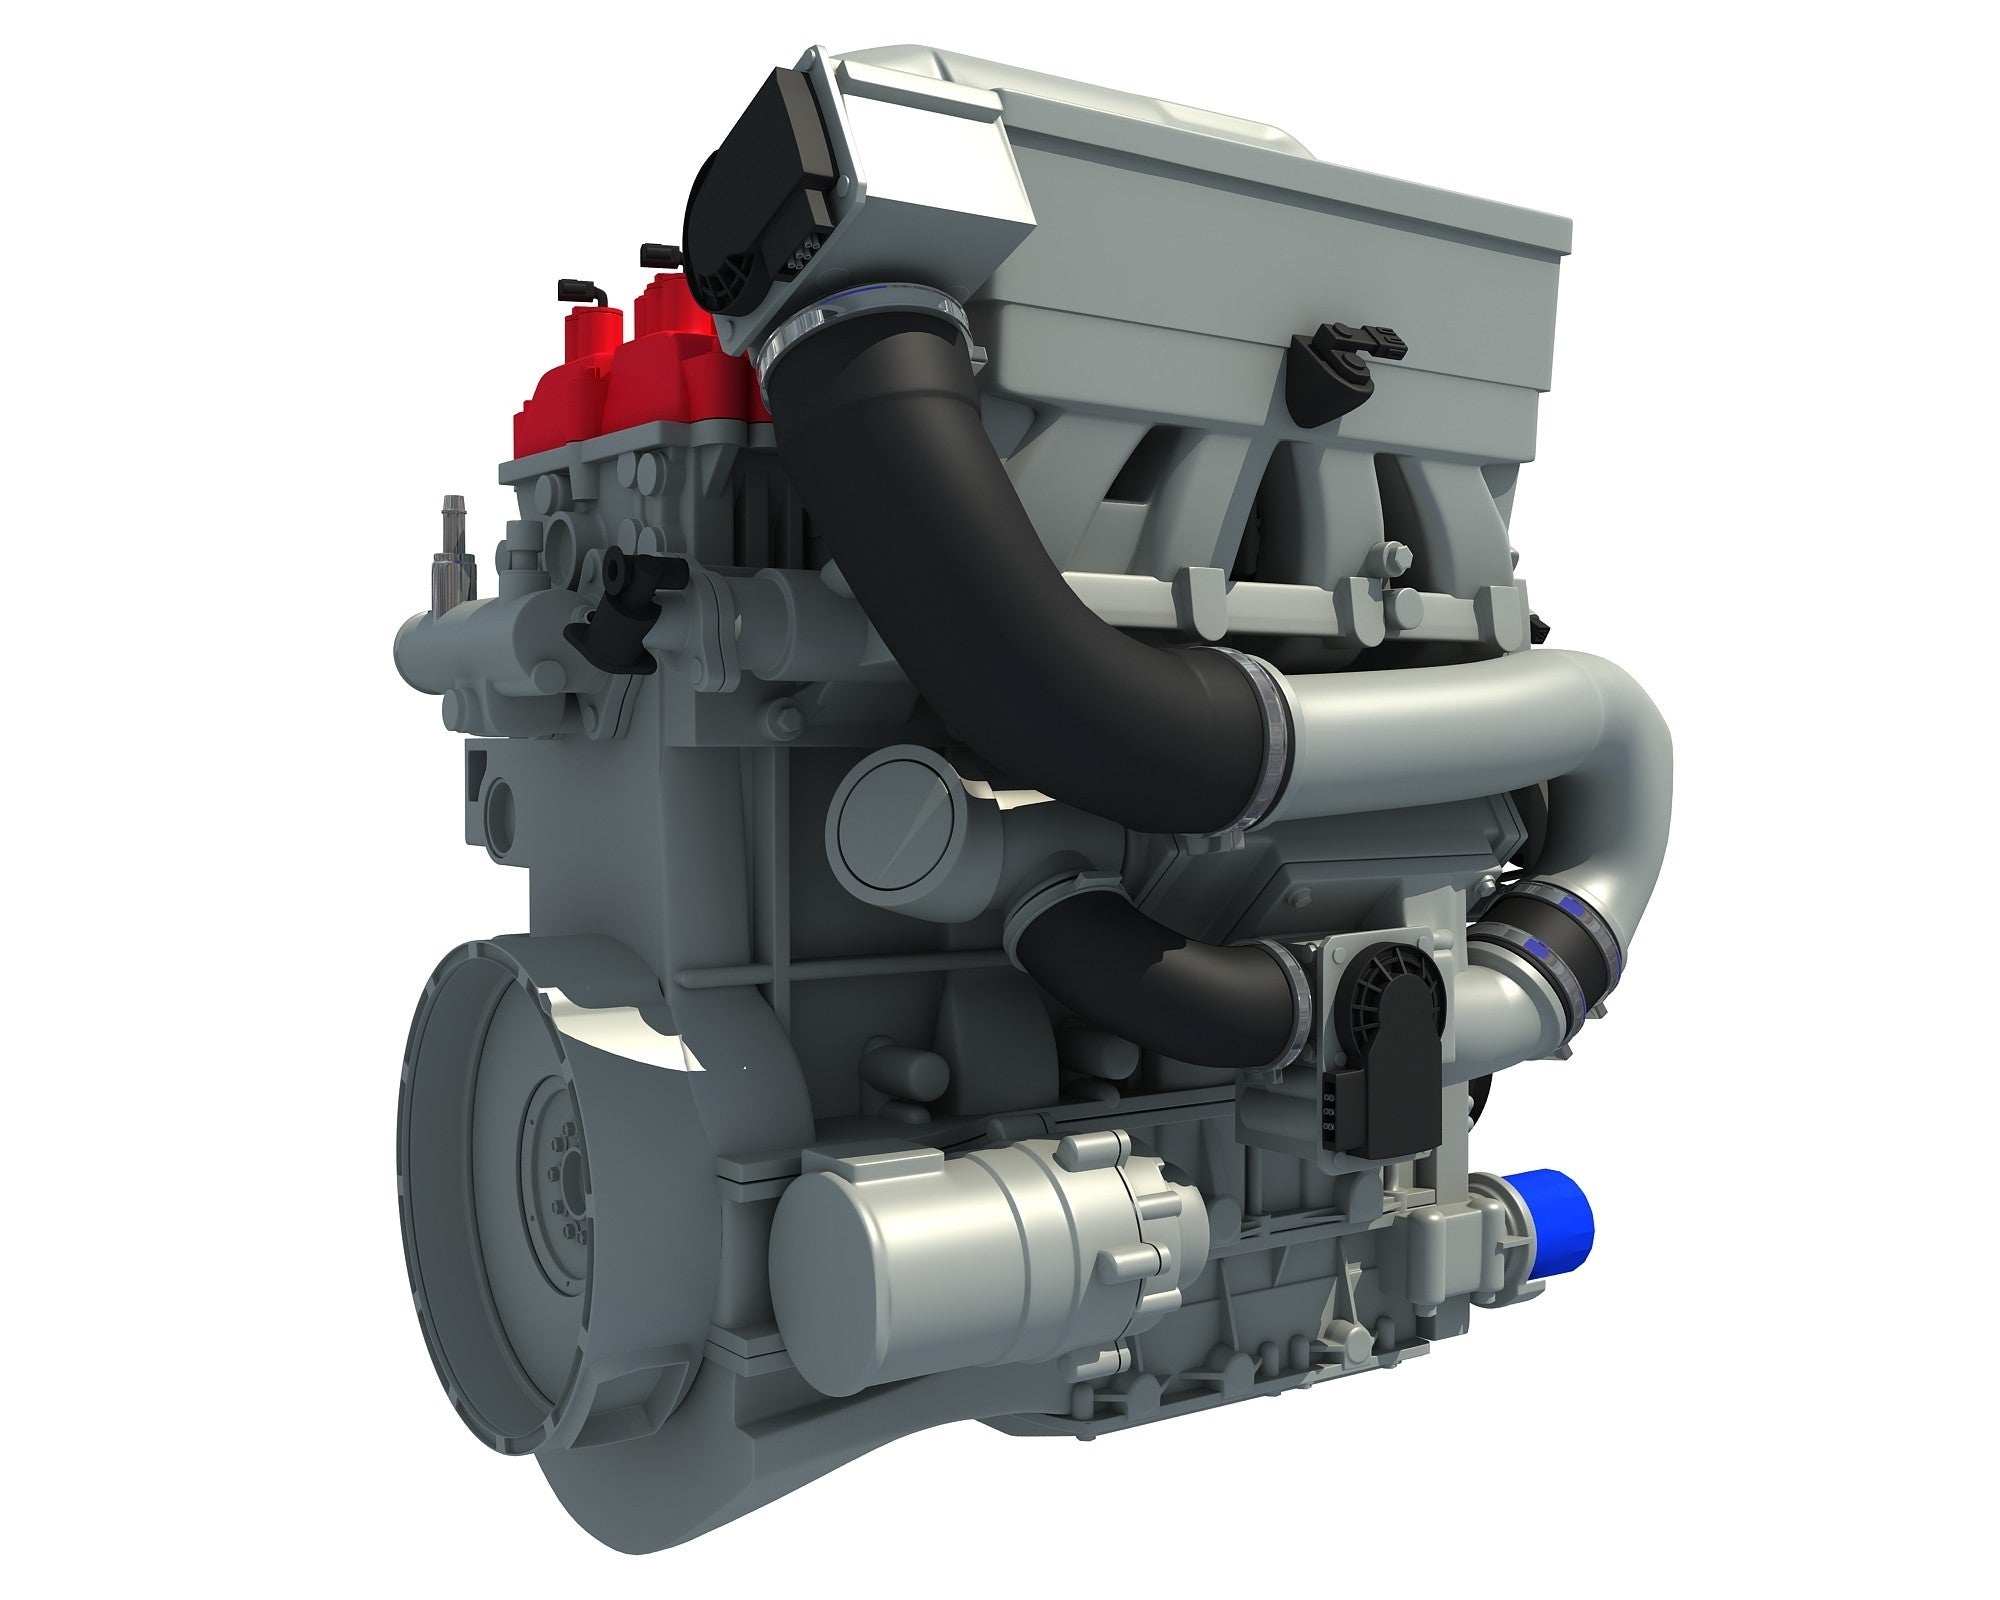 Car Engine 3d Model